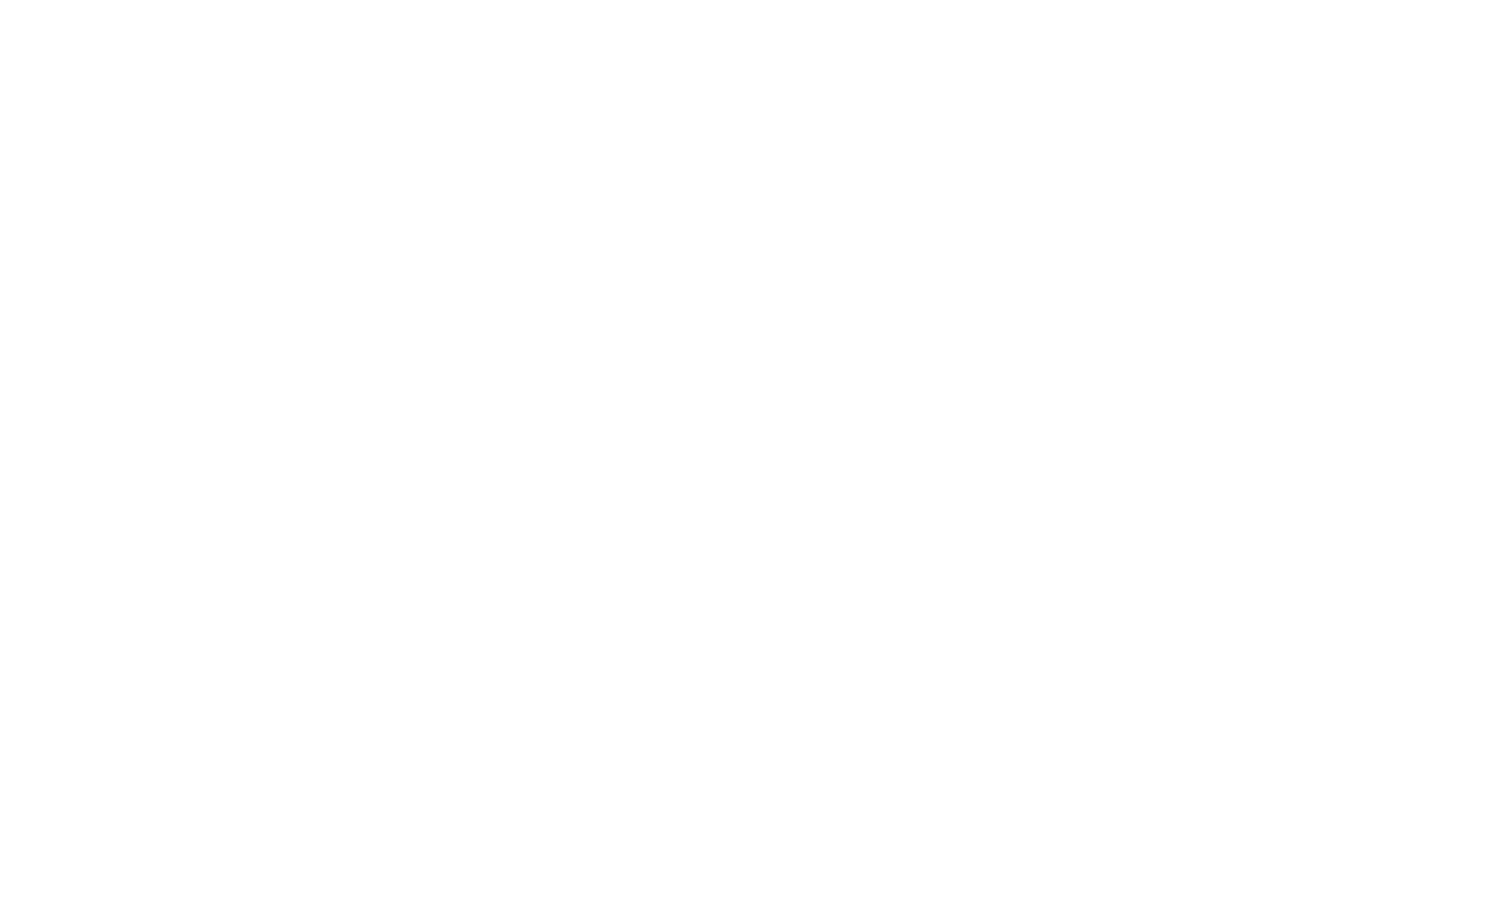 Jeff Zook